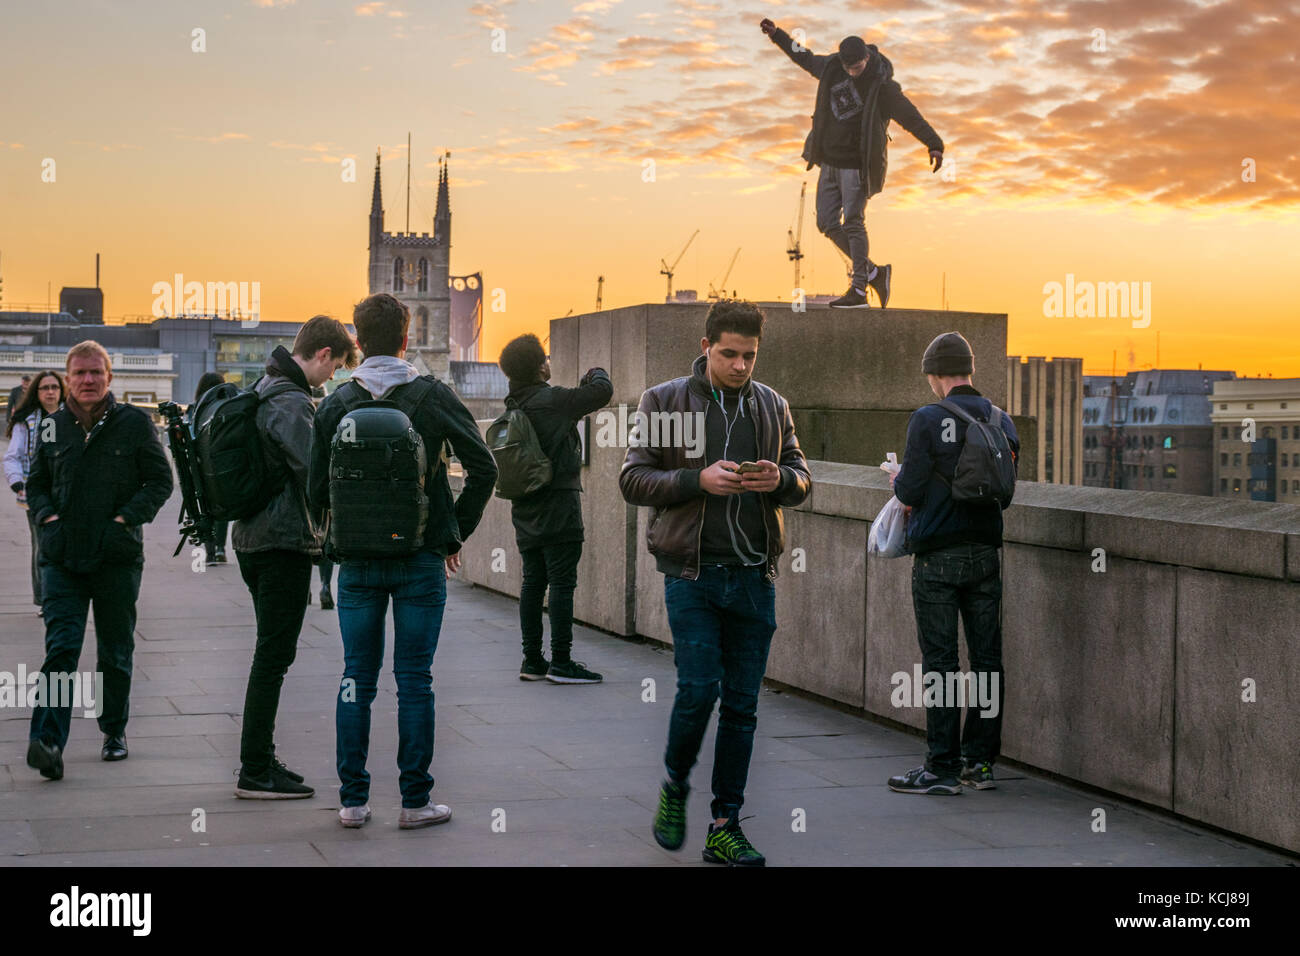 Male youths taking selfies on London Waterloo Bridge at sunset Stock Photo